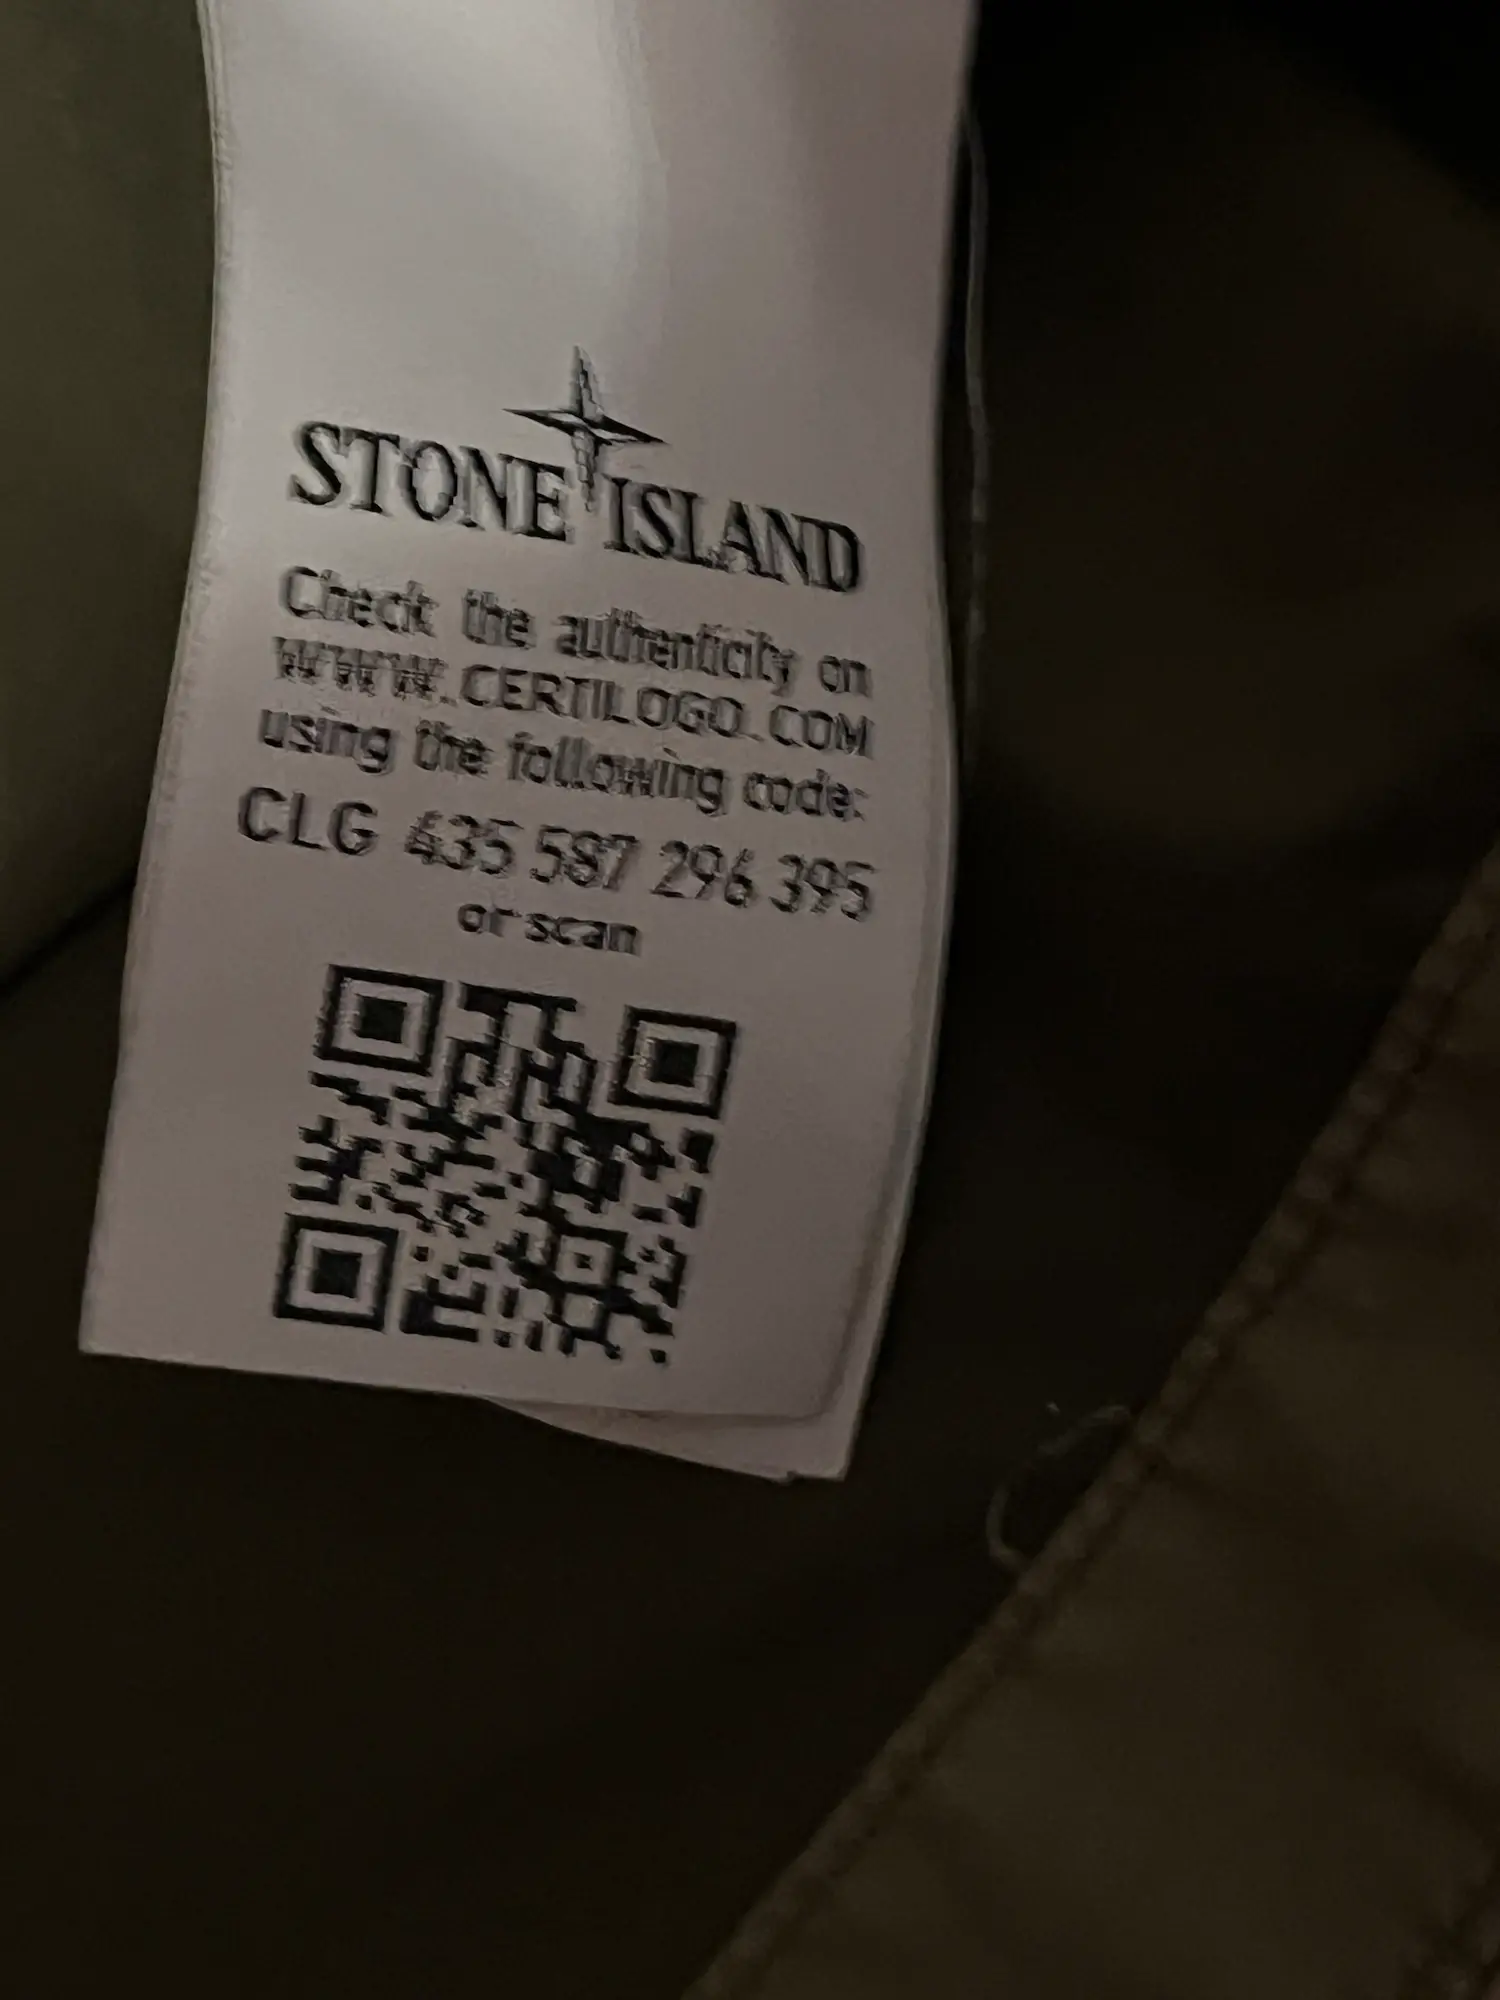 Stone Island jakke